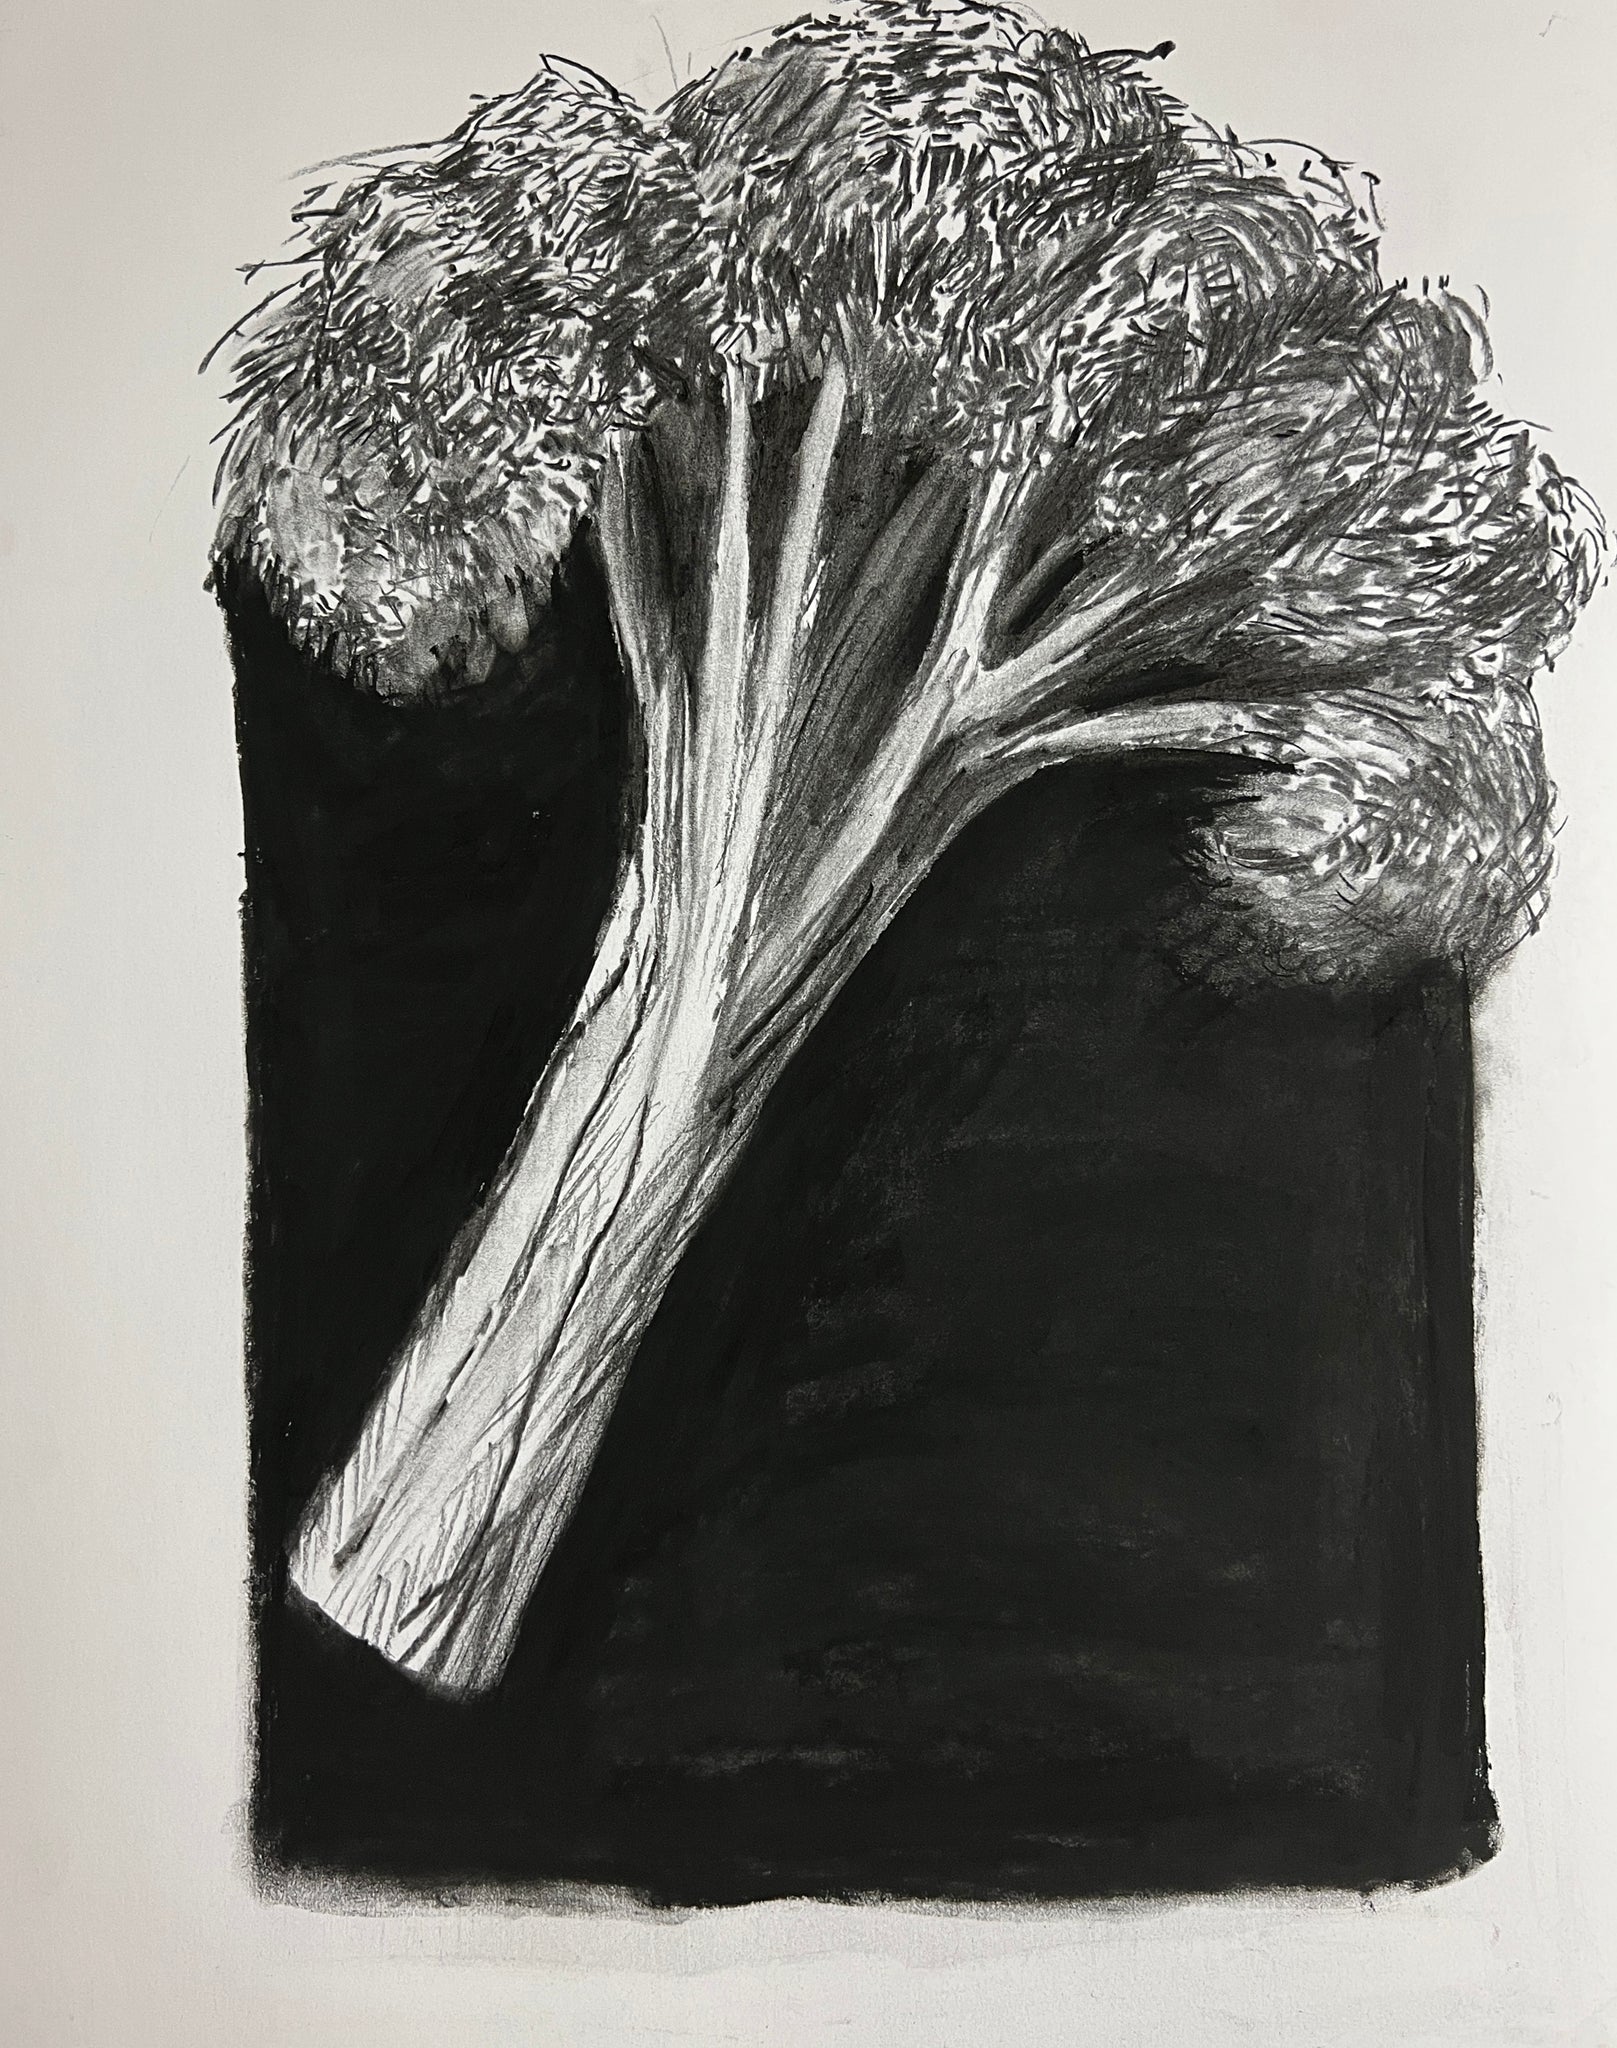 2290: Broccoli Drawing